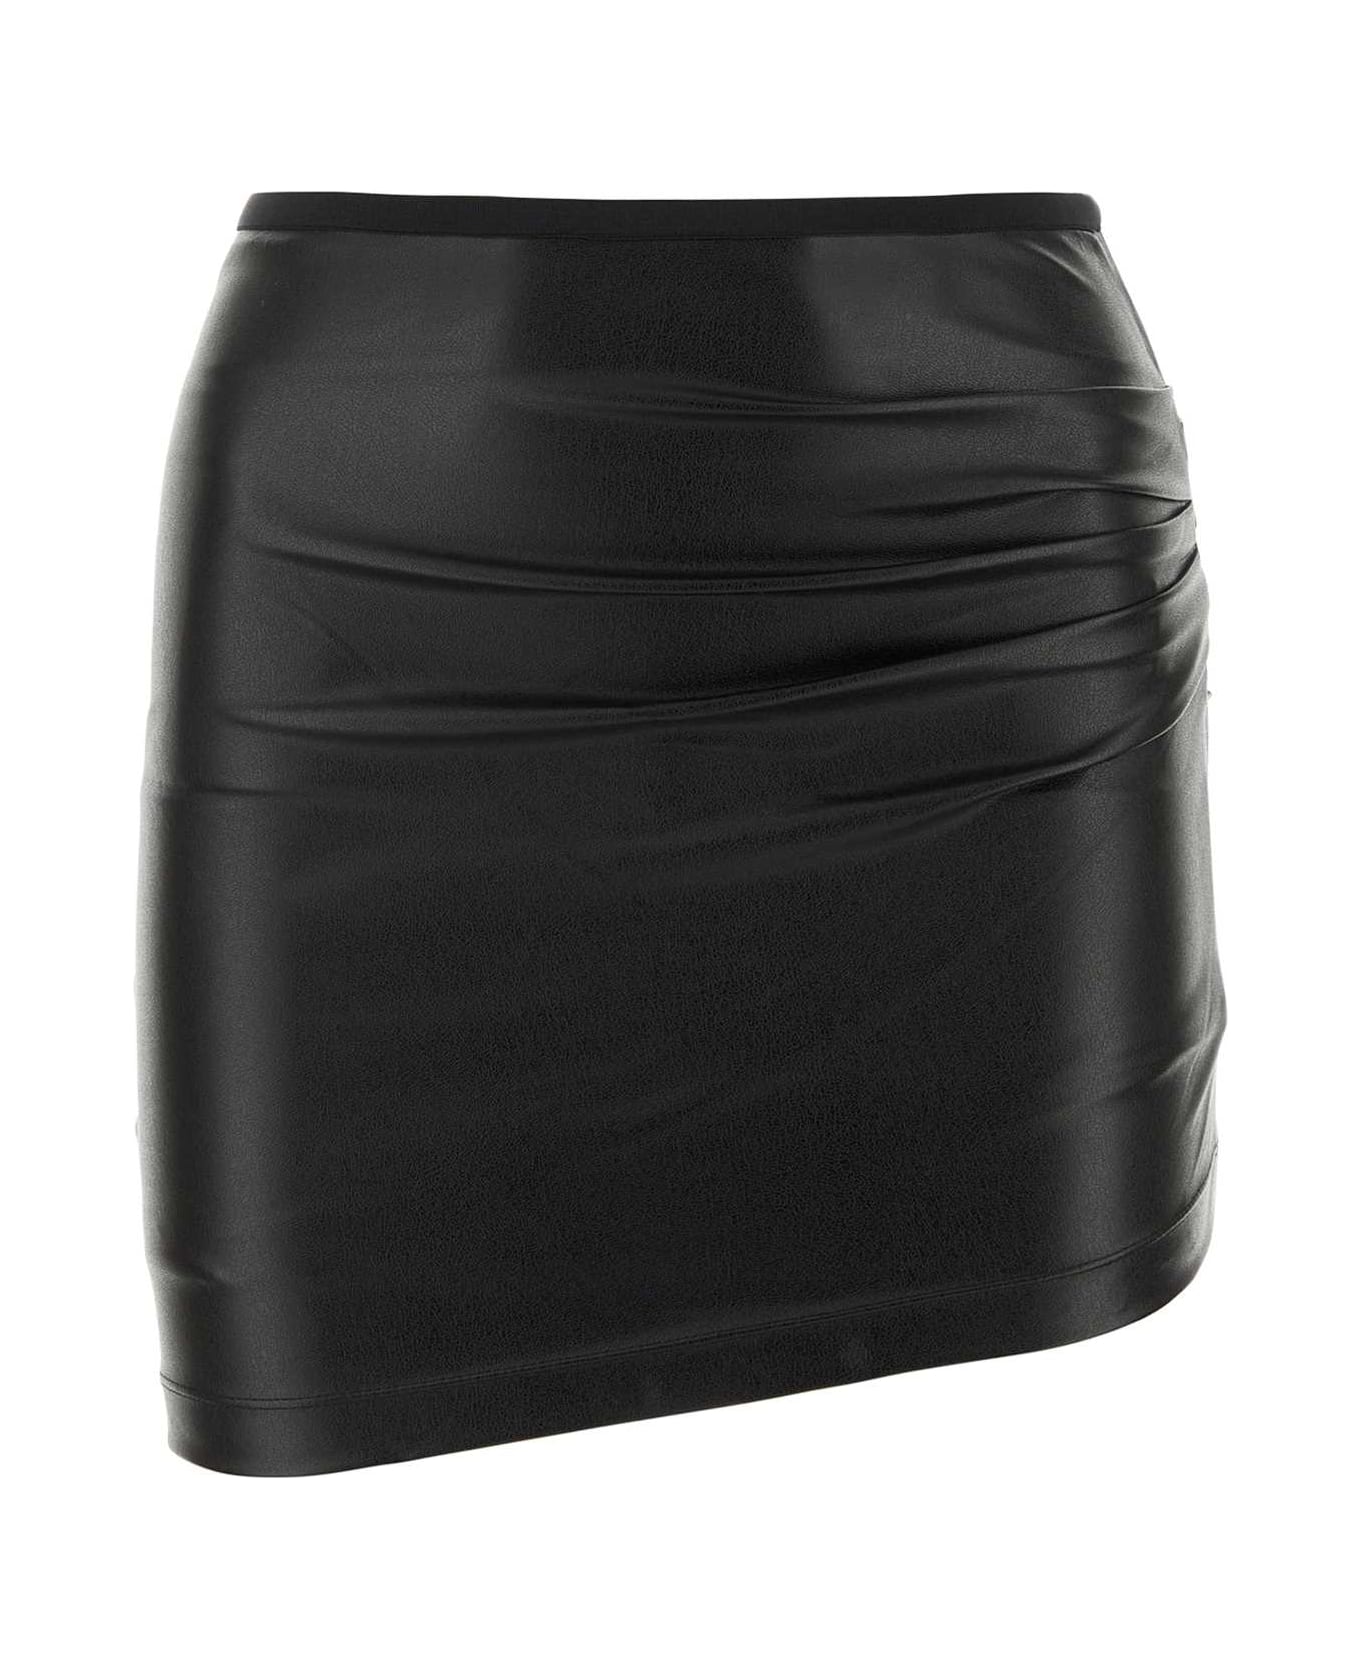 Helmut Lang Black Synthetic Leather Mini Skirt - Black